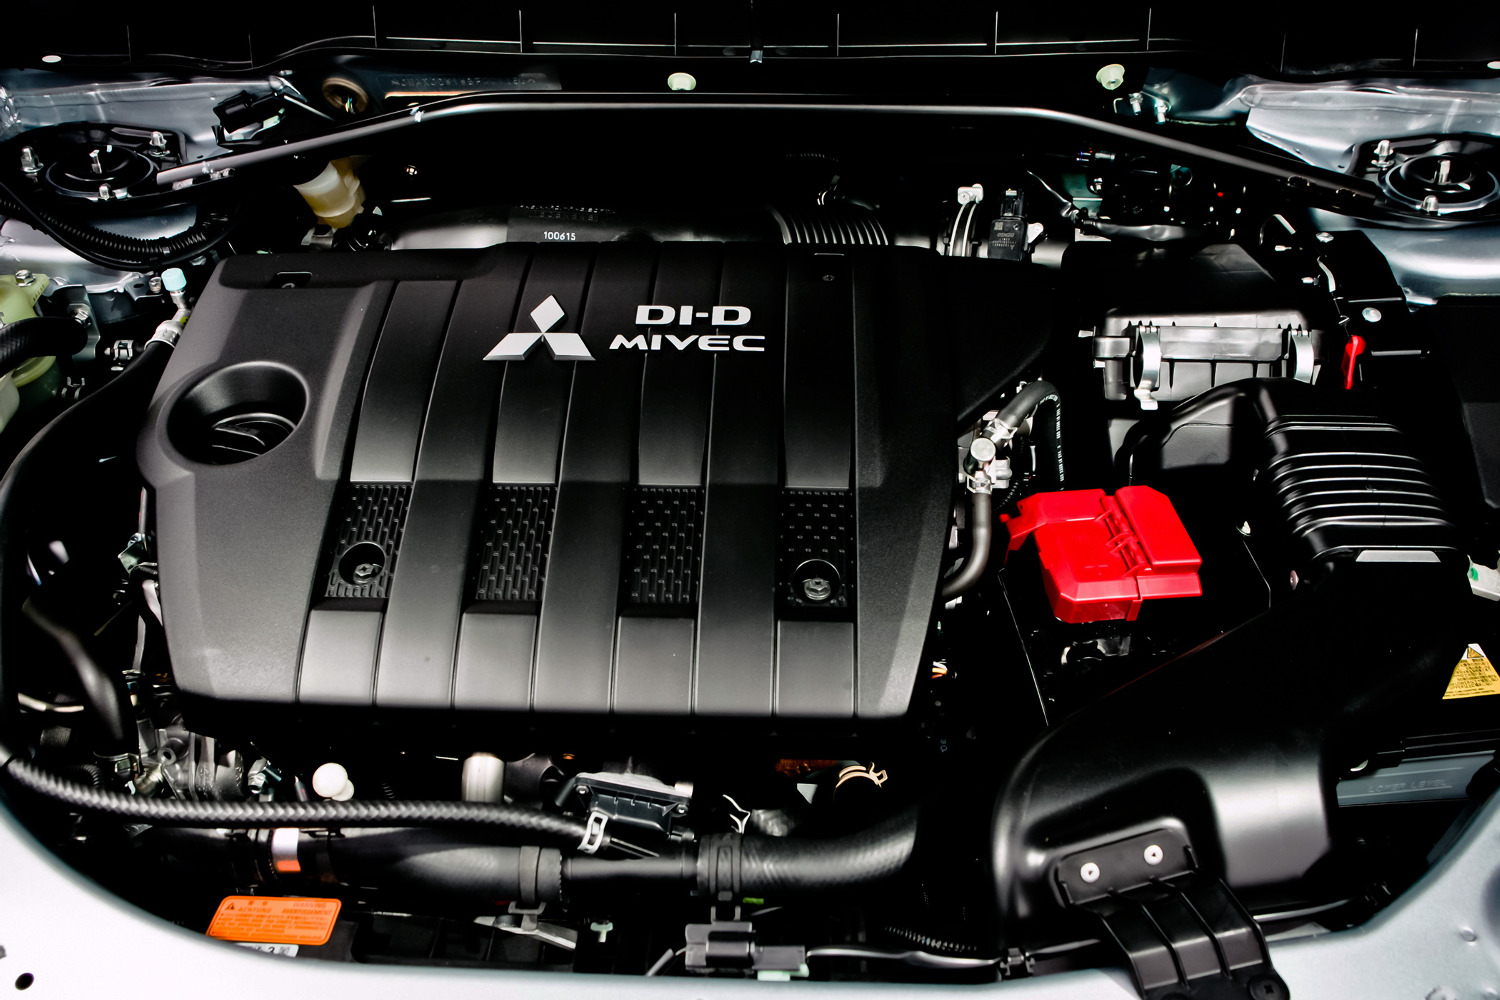 Двигатель мицубиси аутлендер хл. Outlander XL 2.0 под капотом. Mitsubishi Outlander XL 2.0 двигатель. Под капотом Митсубиси Аутлендер XL. Кожух двигателя Mitsubishi Outlander 1.